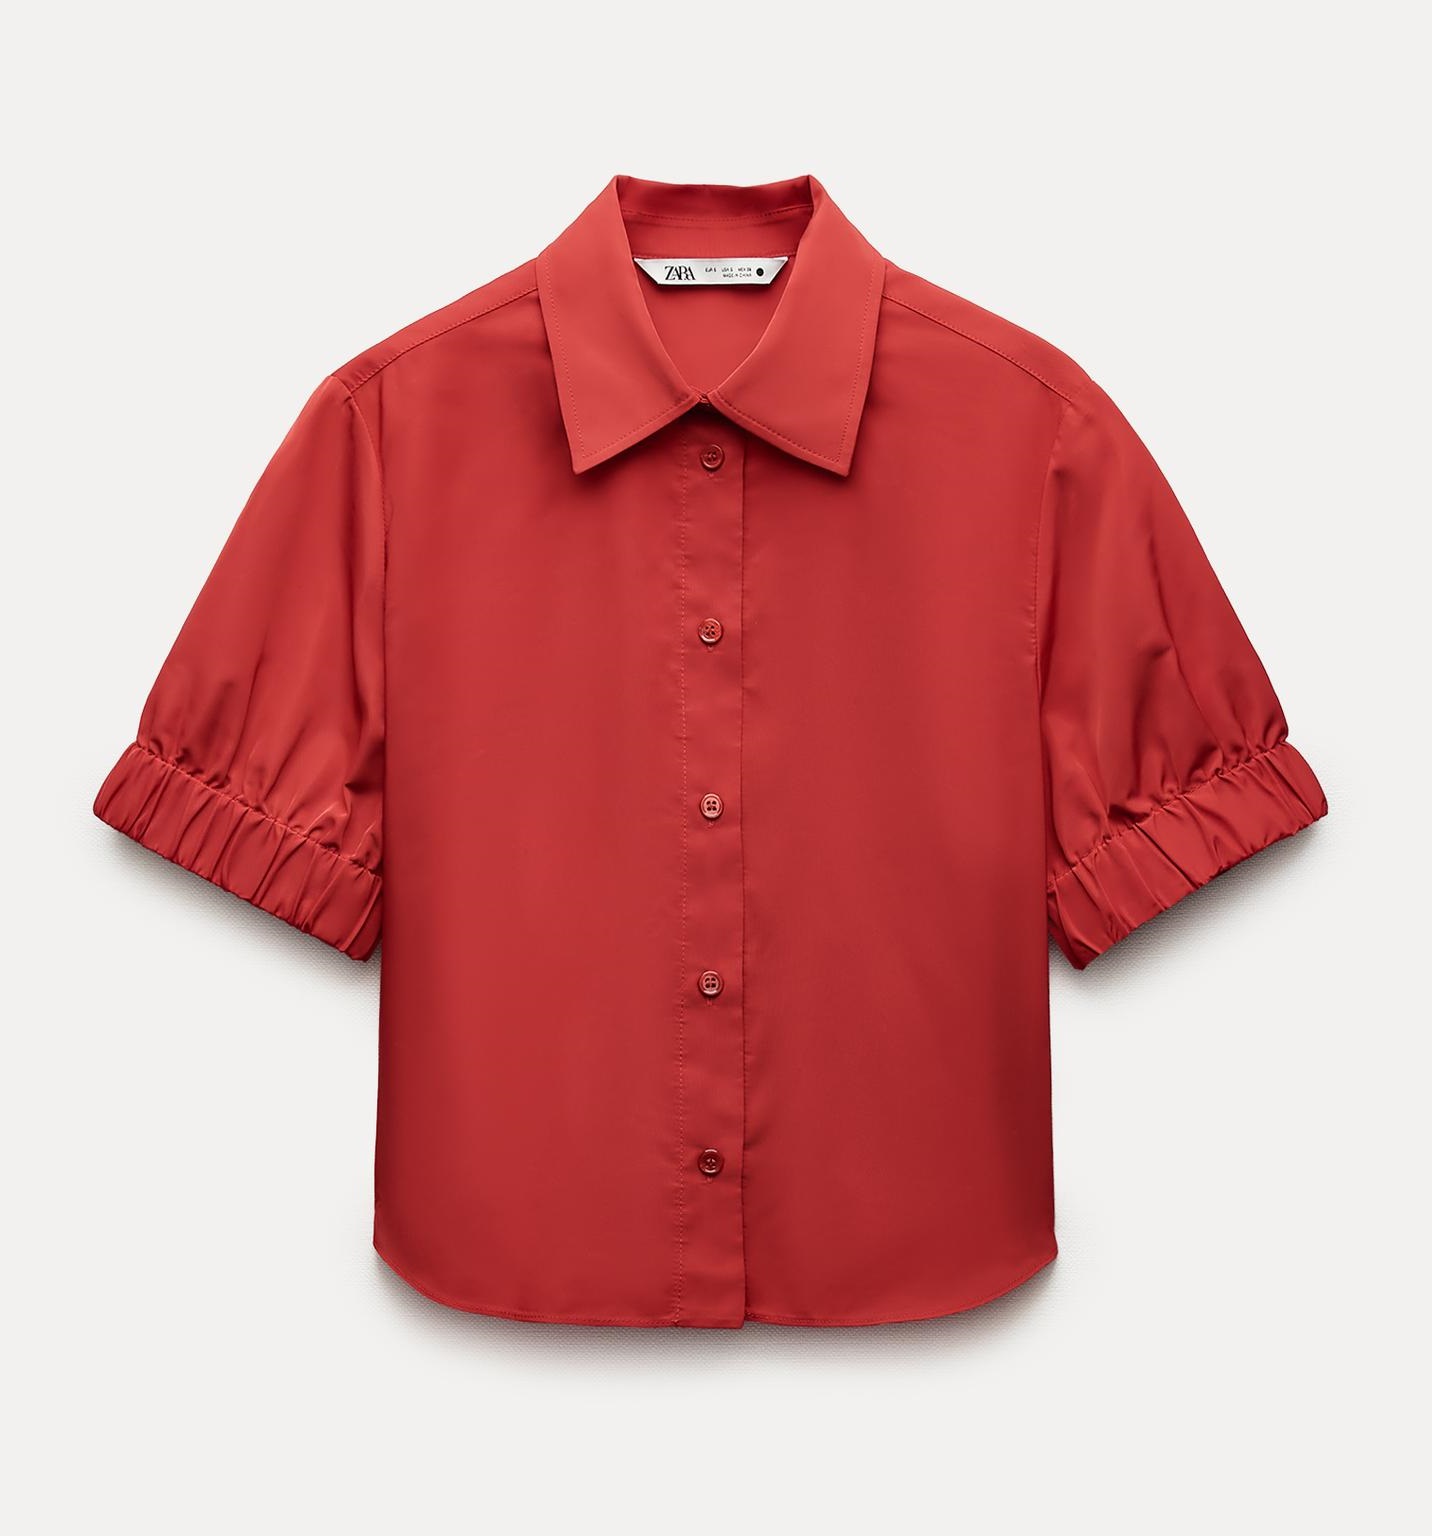 Рубашка Zara ZW Collection Cropped, красный рубашка zara zw collection printed светло бежевый красный